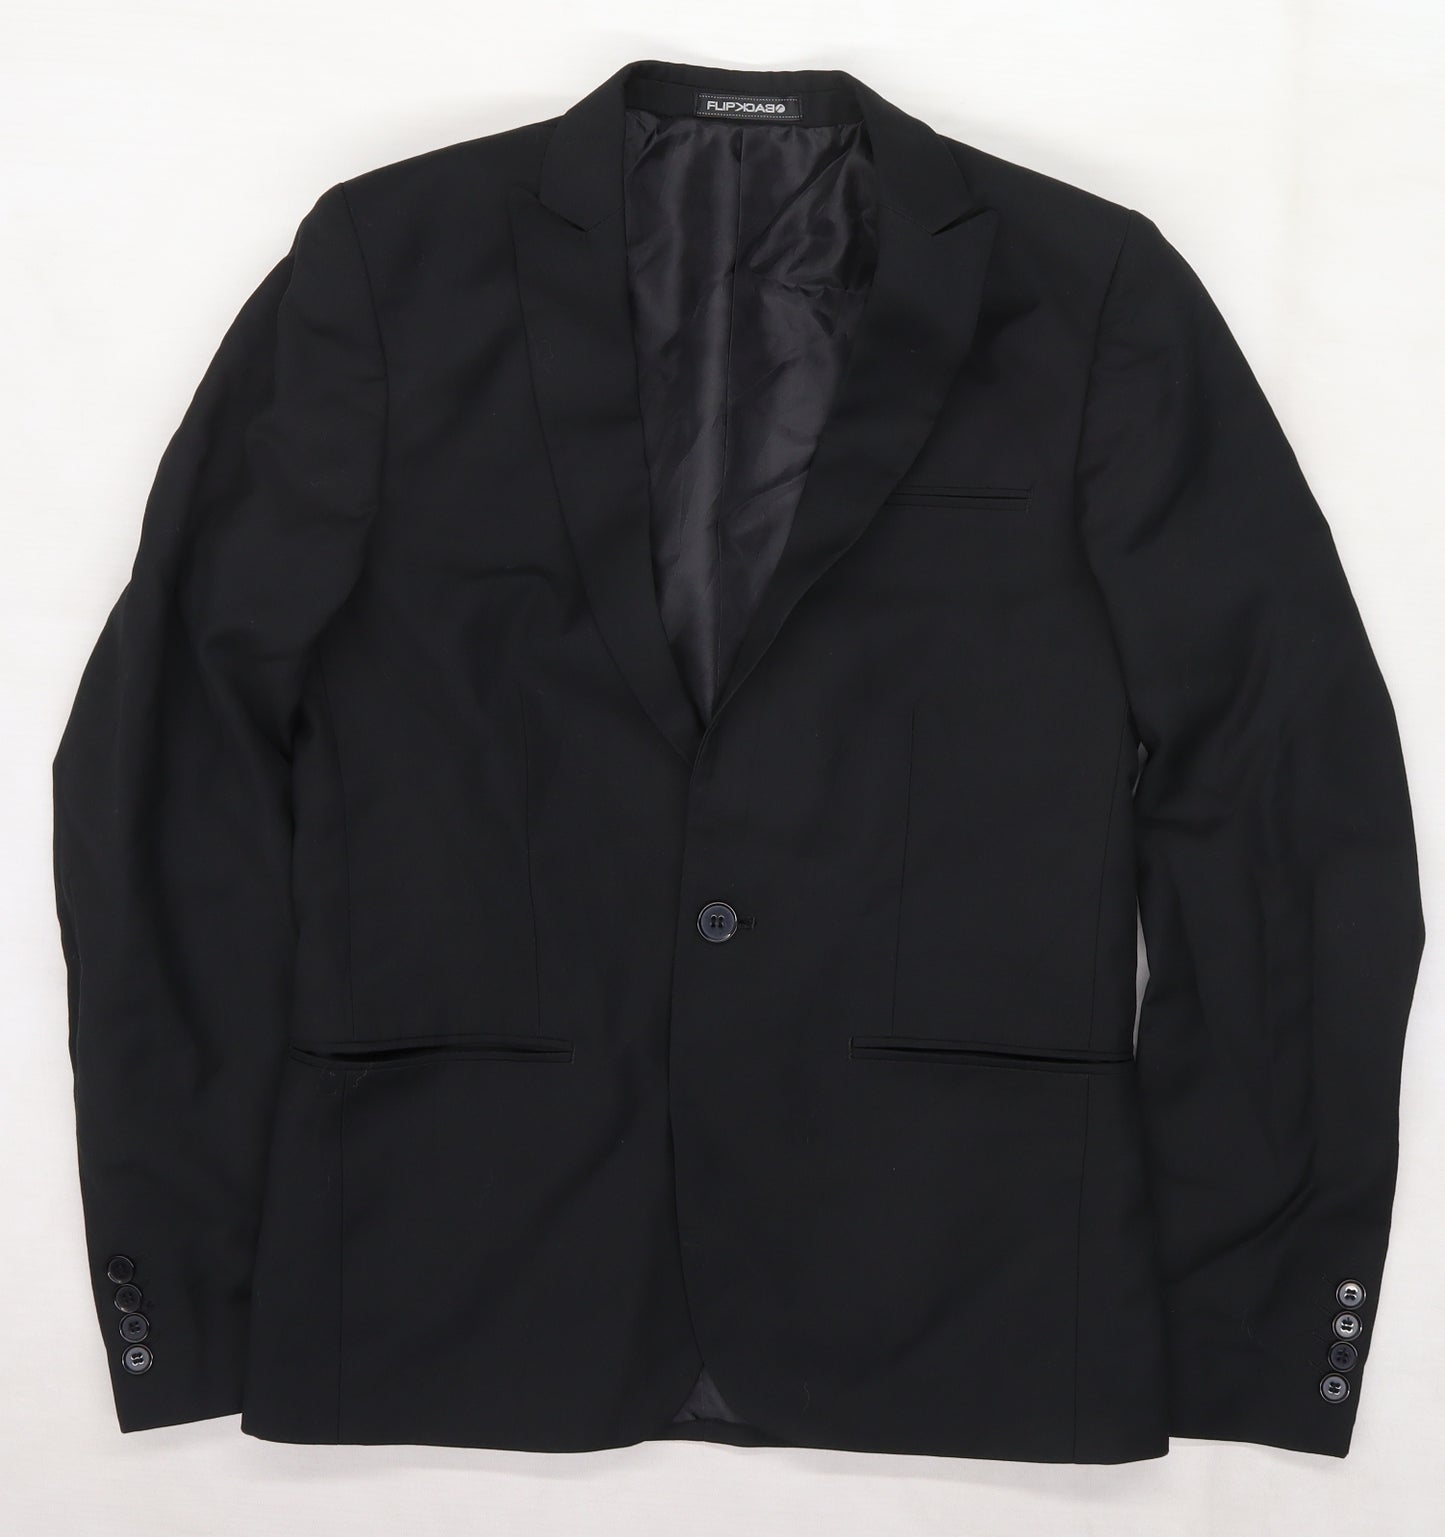 Backflip Boys Black   Jacket  Size 14 Years  - Suit Jacket